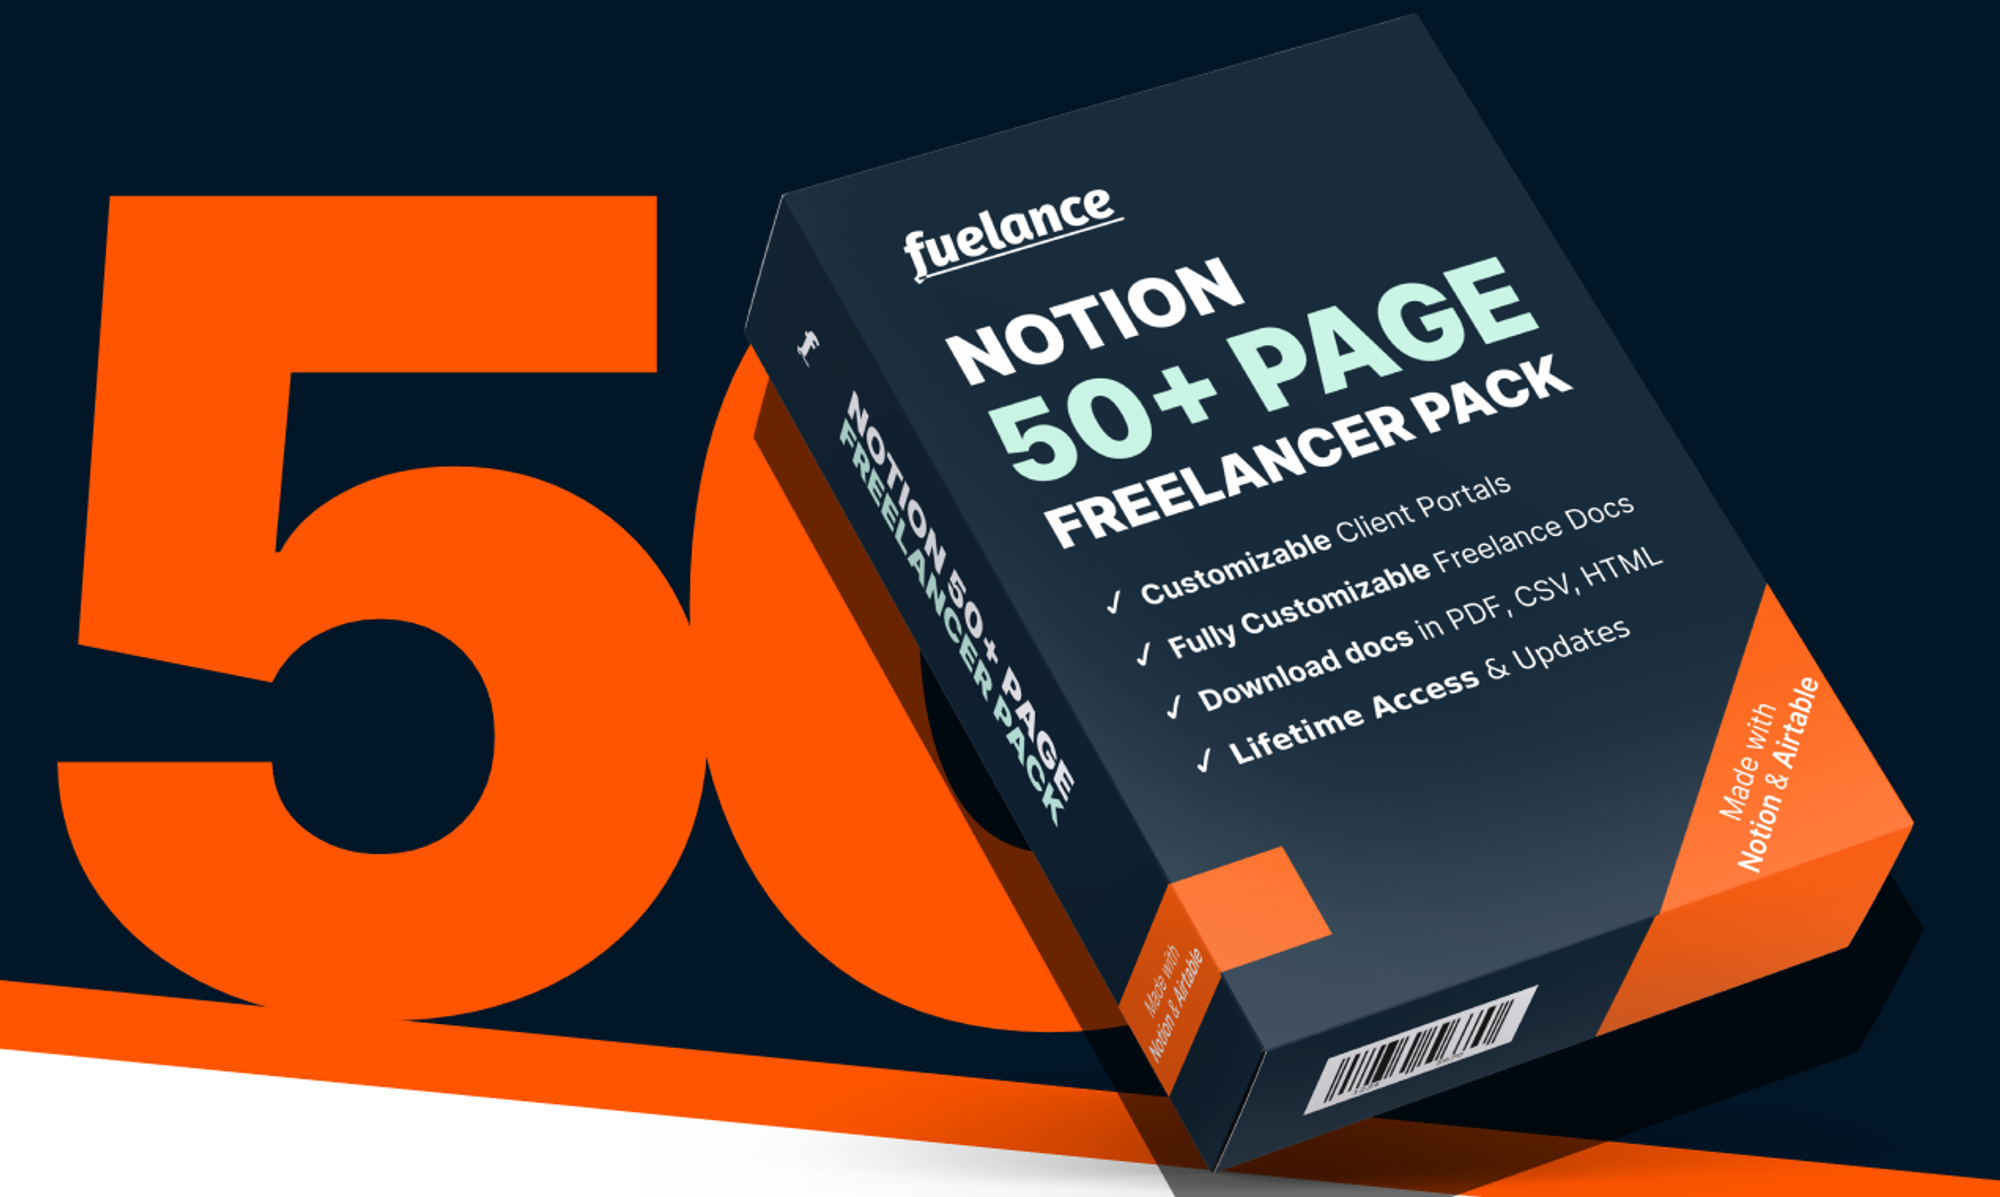 50+ Page Freelancer Pack Fuelance PH1.png